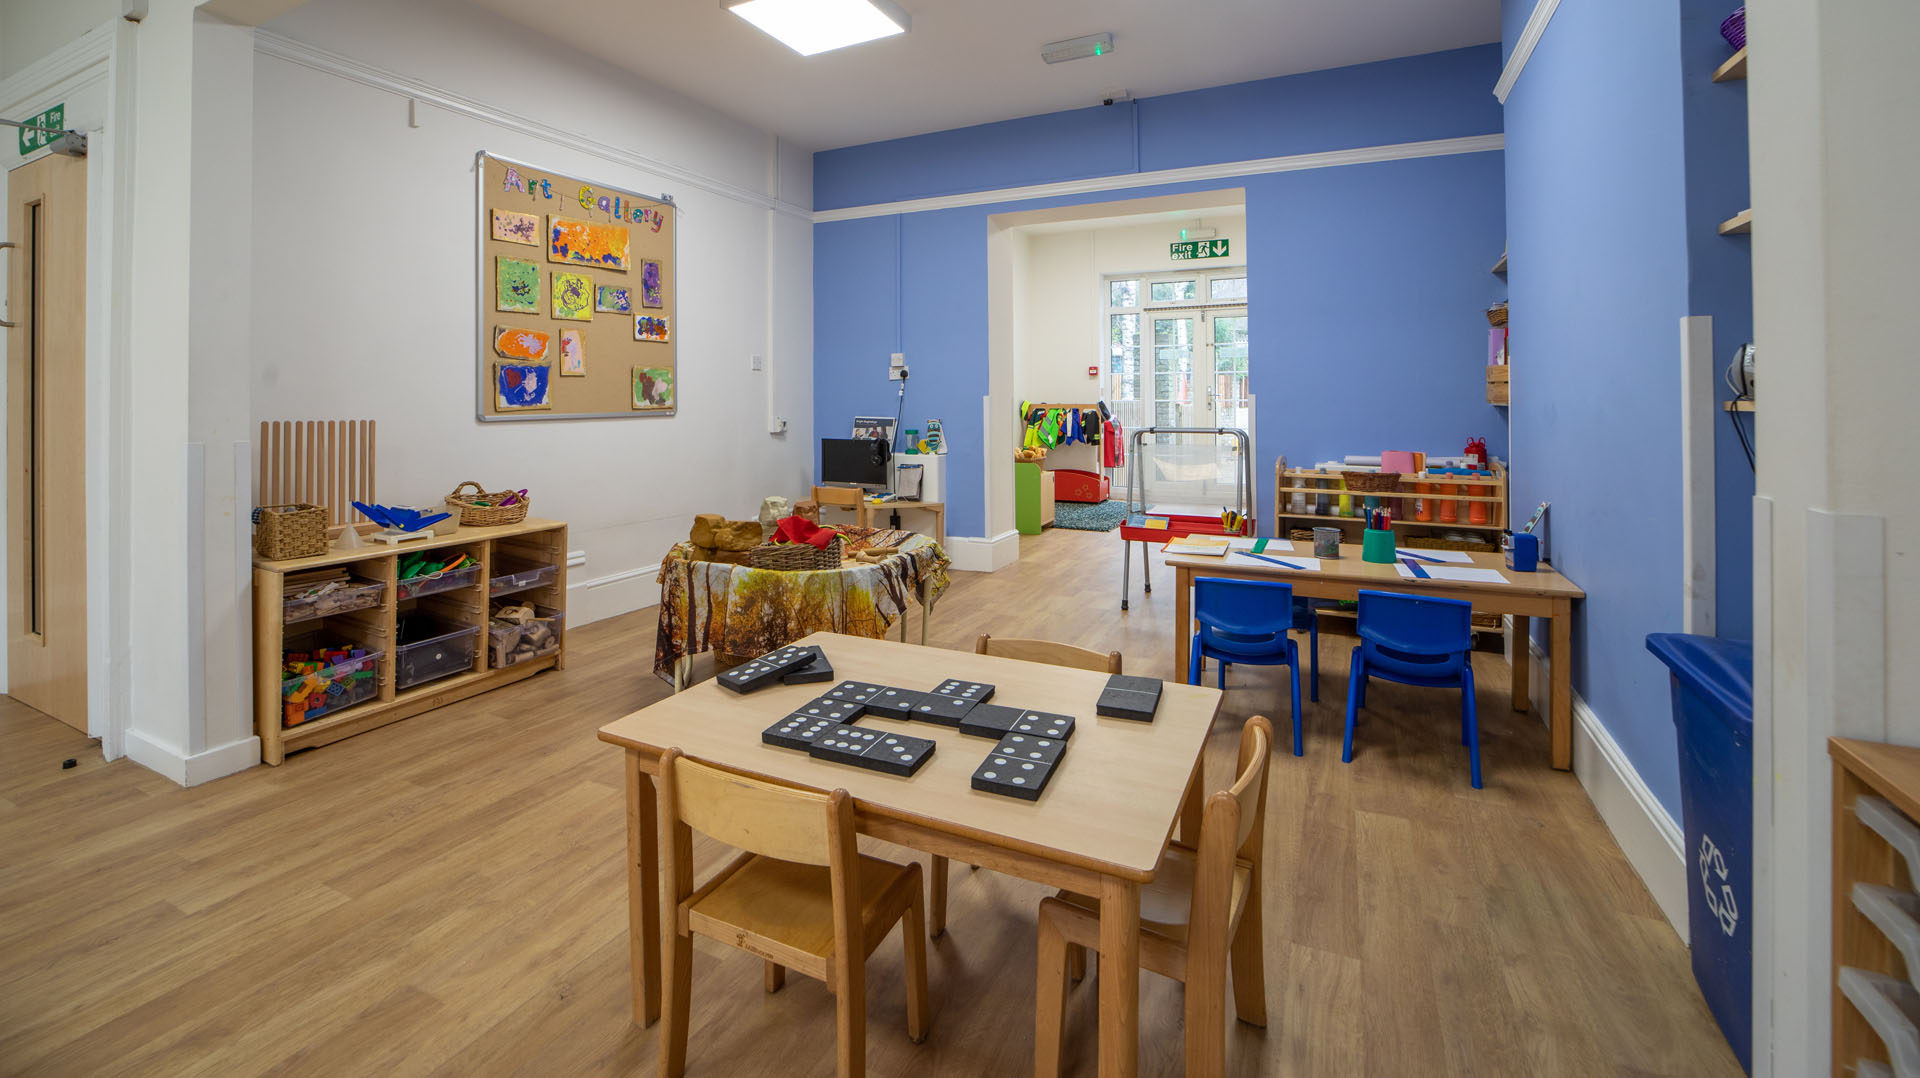 Lewisham Day Nursery and Preschool Room